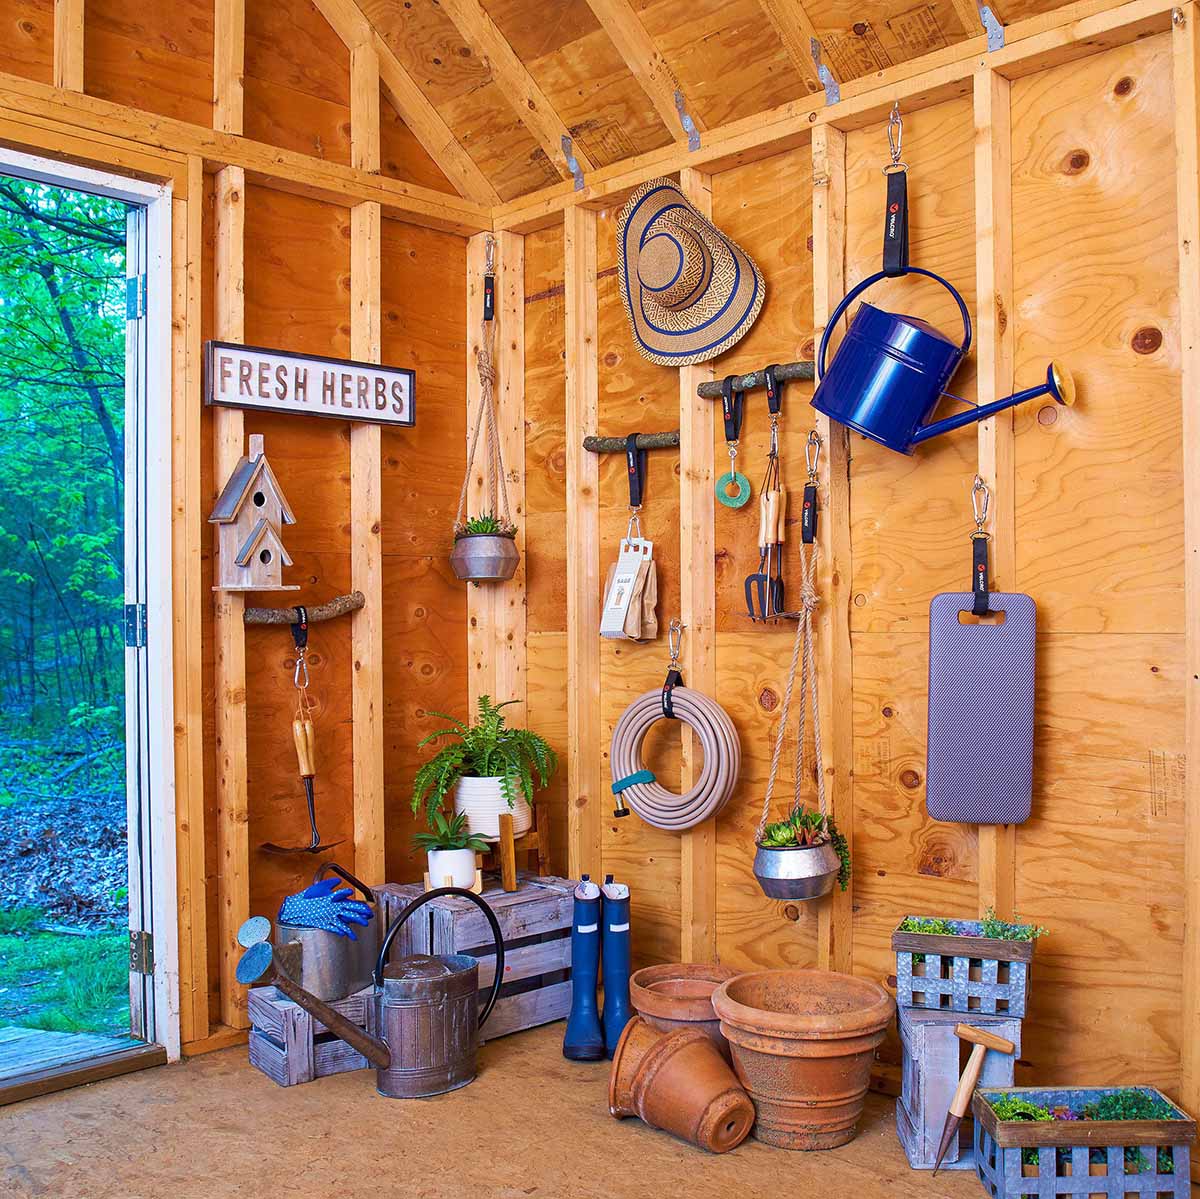 12 Garden Tool Storage Ideas (How To Organize Garden Tools)